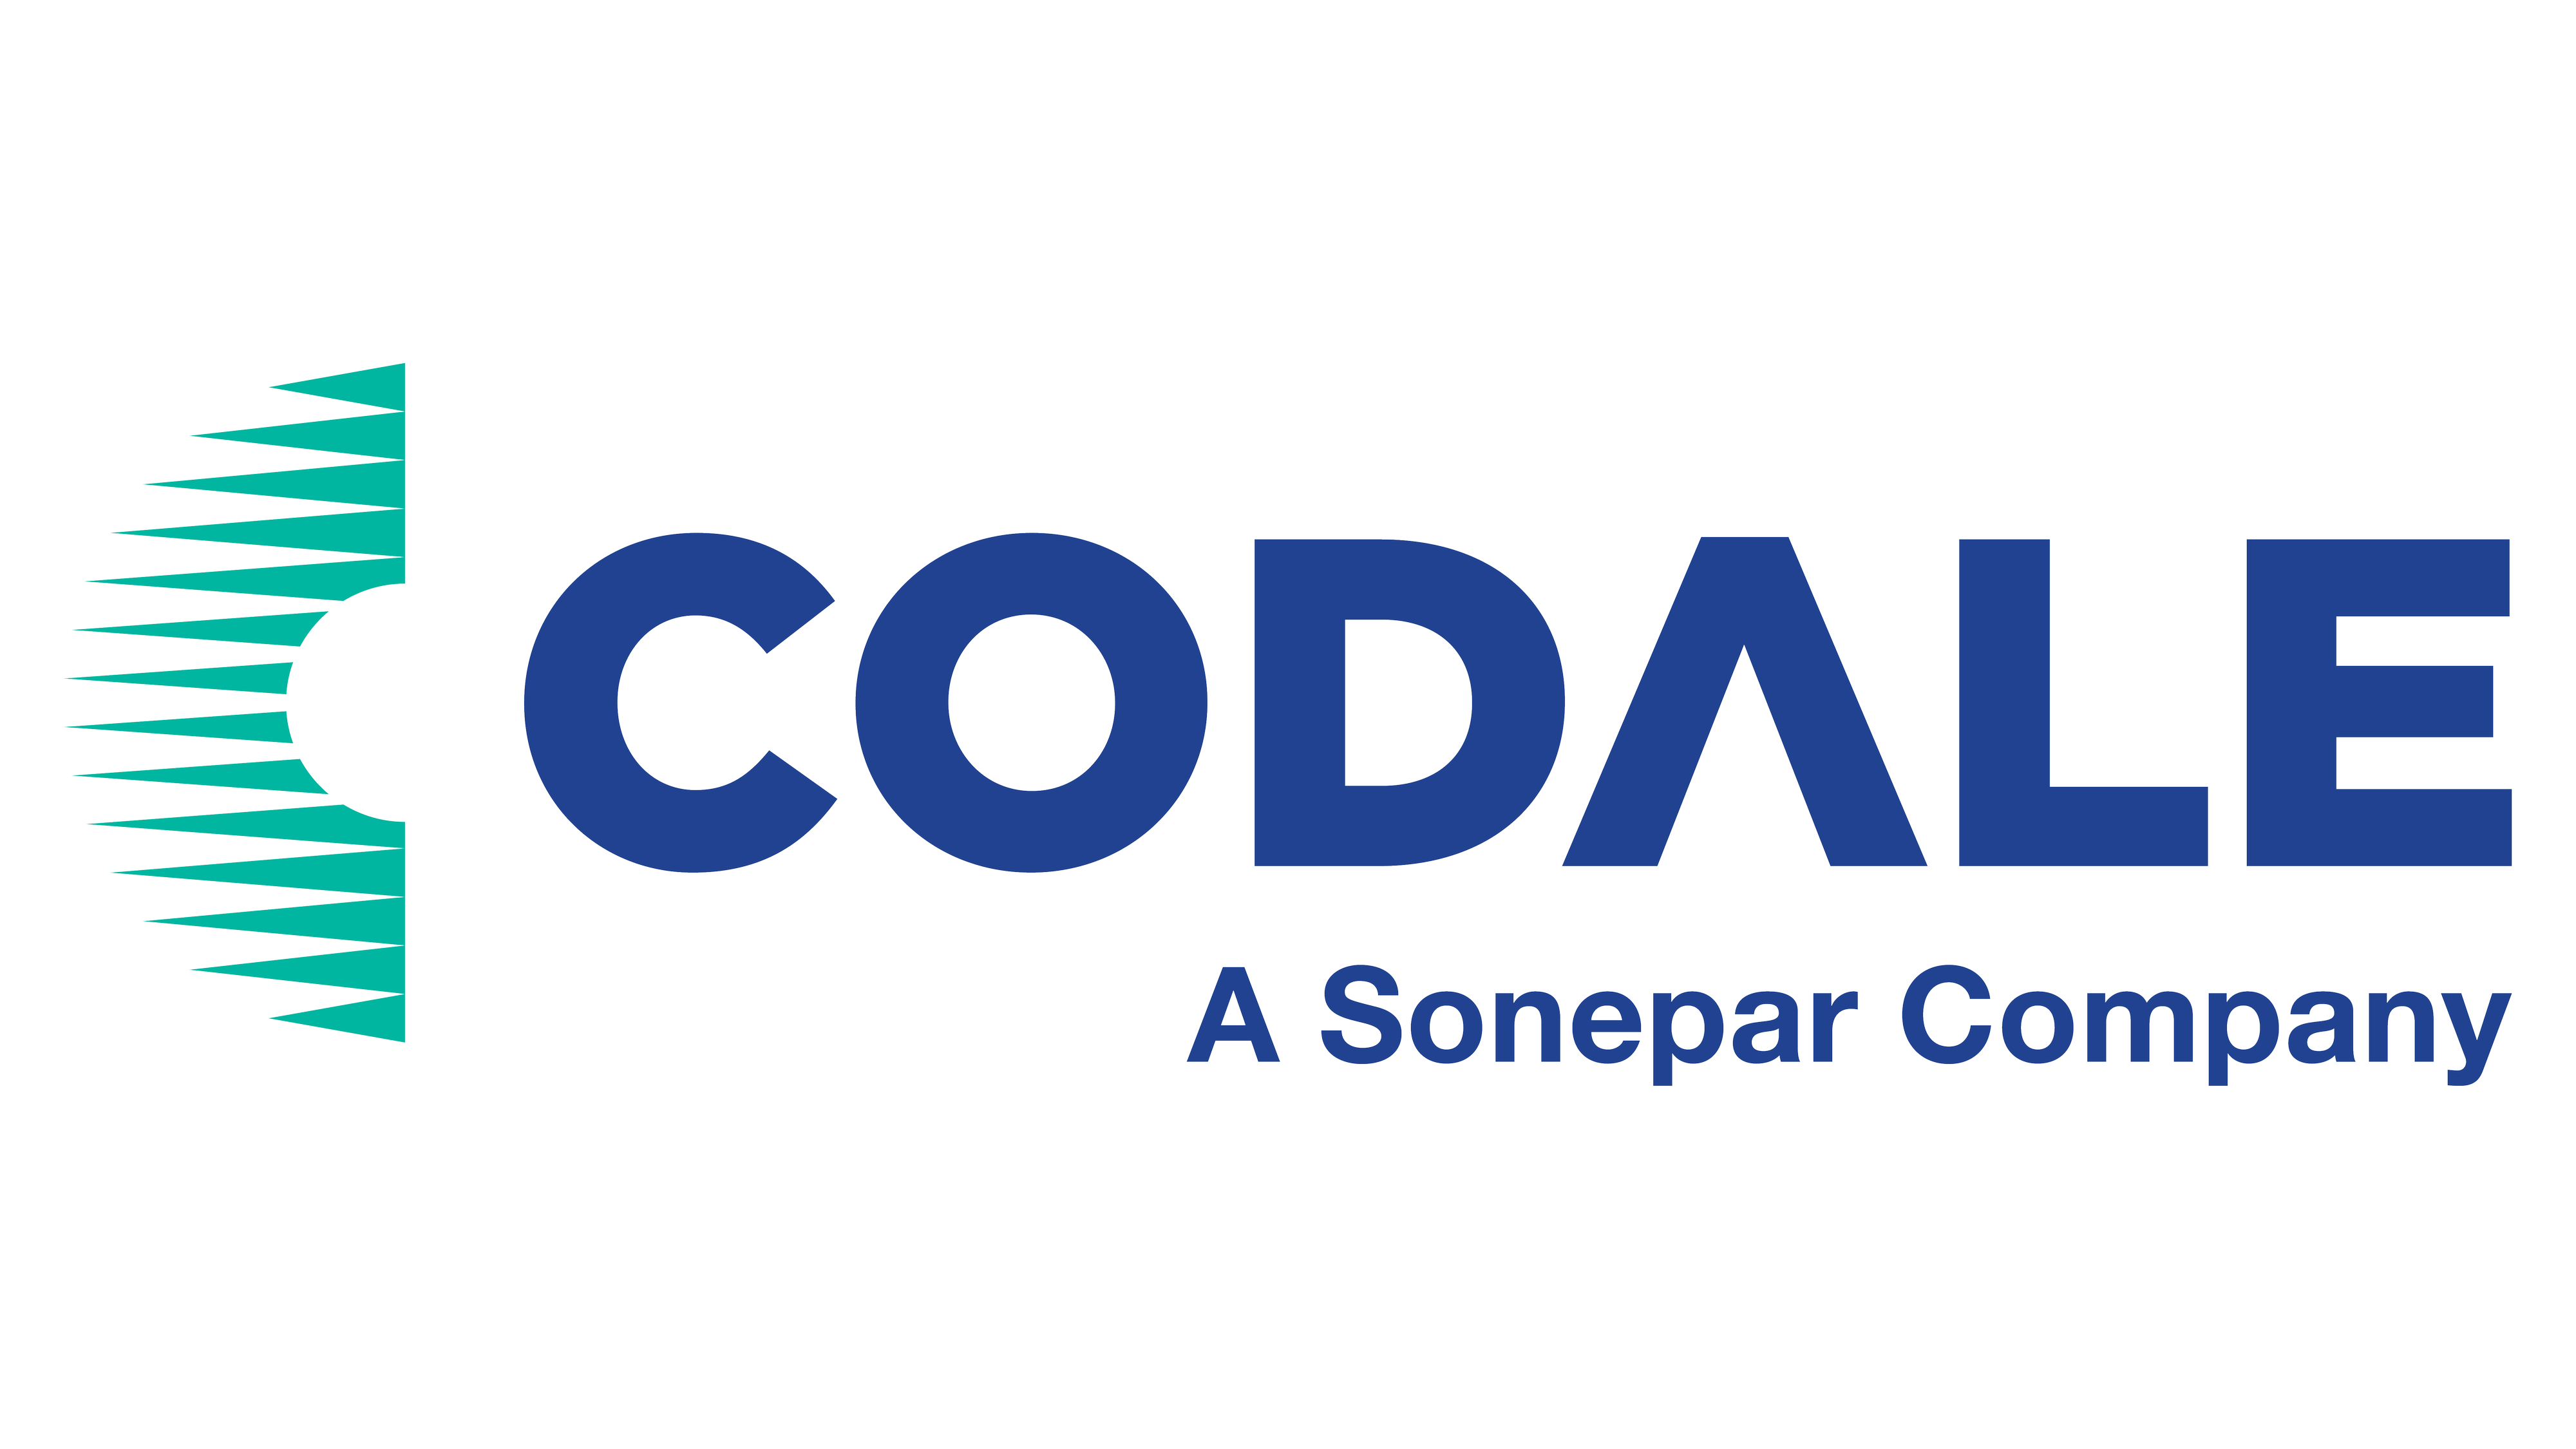 Codale Logo